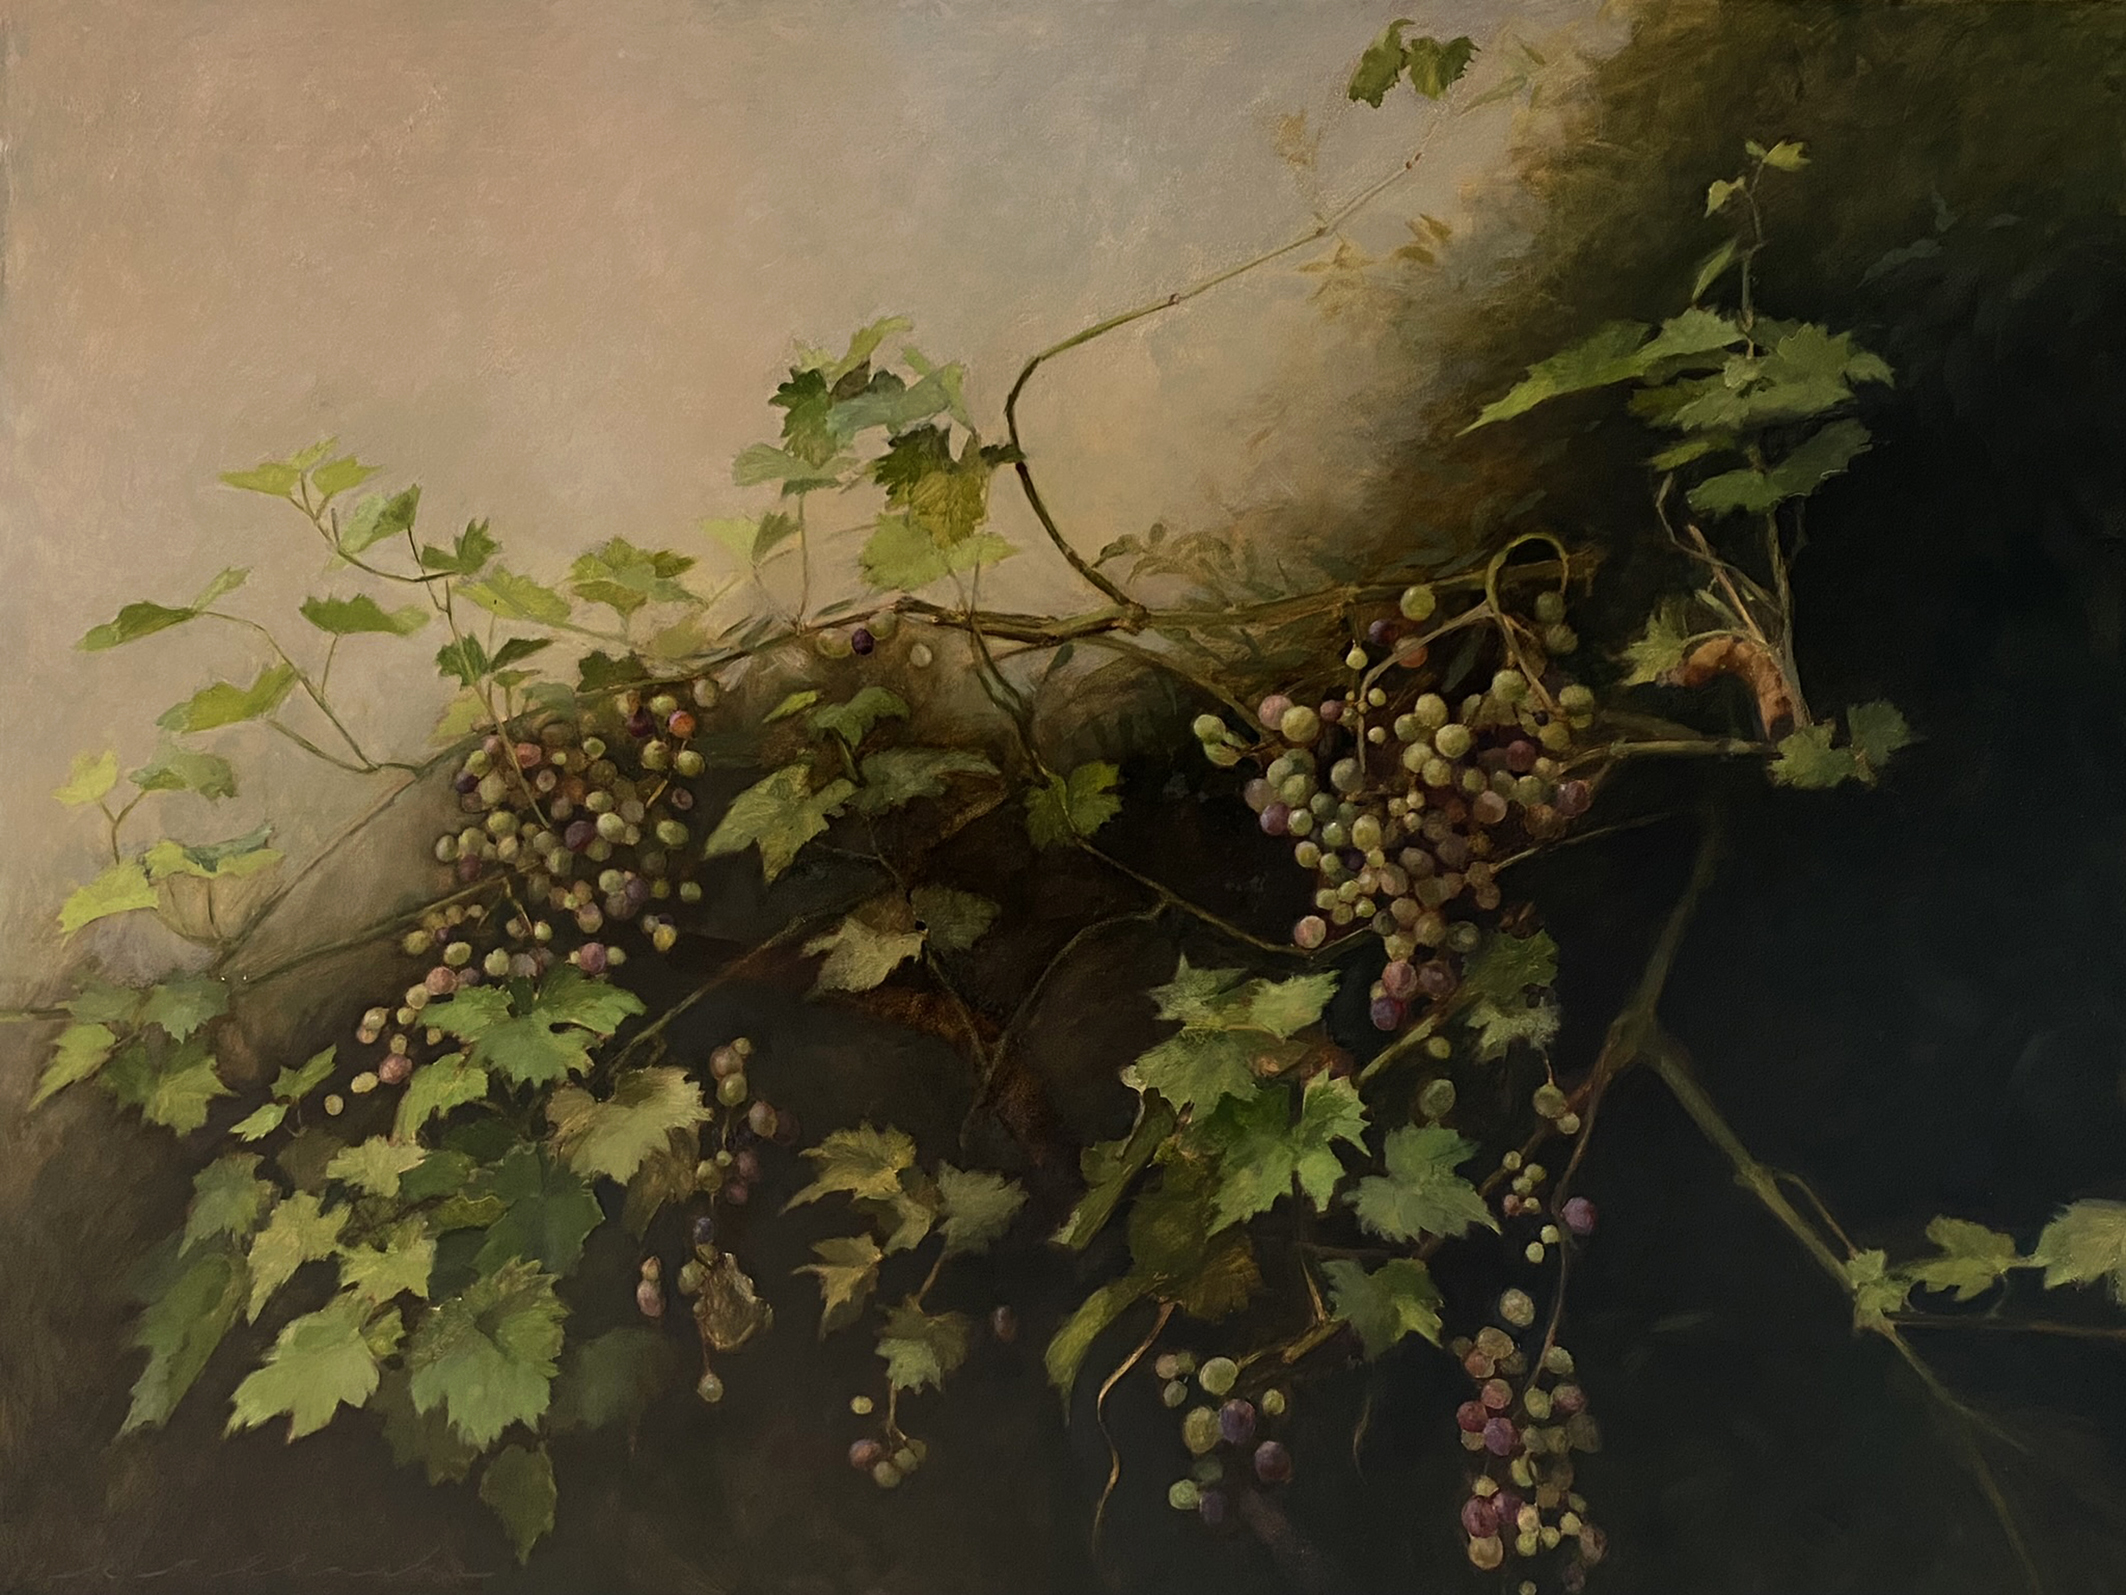 Above the Trellis Wall by Ann Maree Clark | Lethbridge Landscape Prize 2022 Finalists | Lethbridge Gallery